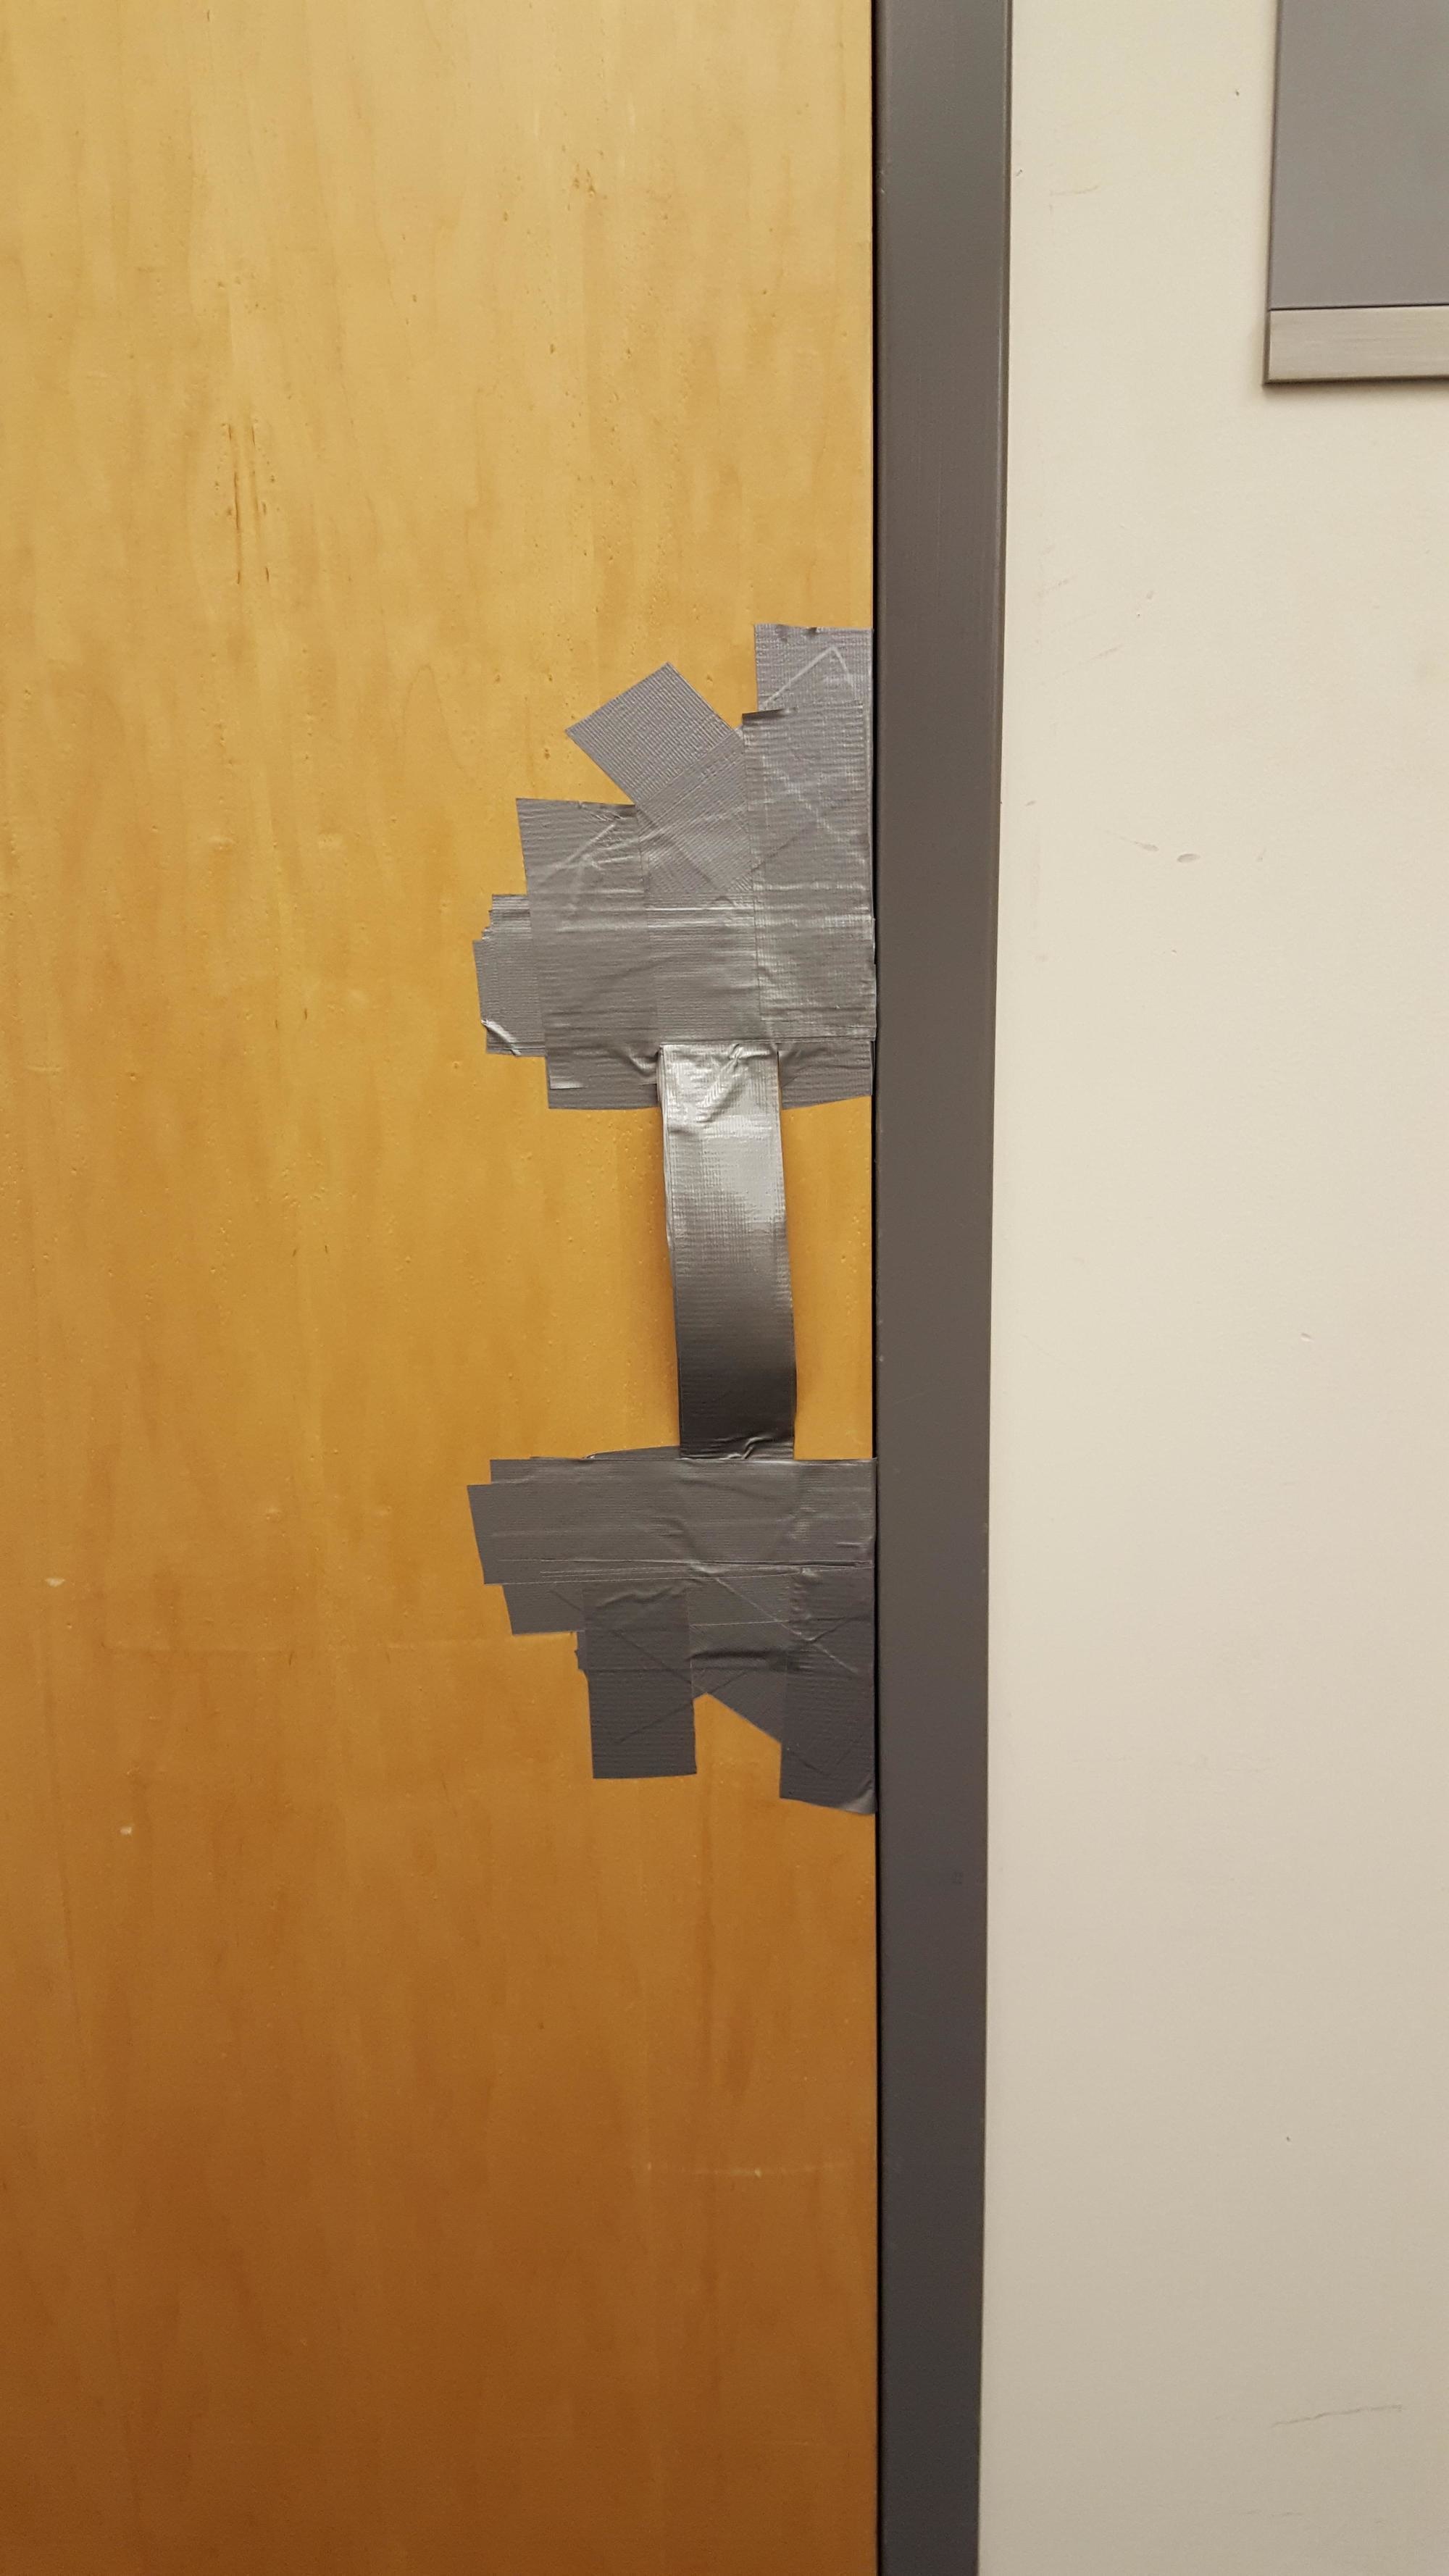 This is what happens when the men's room is missing a door handle.